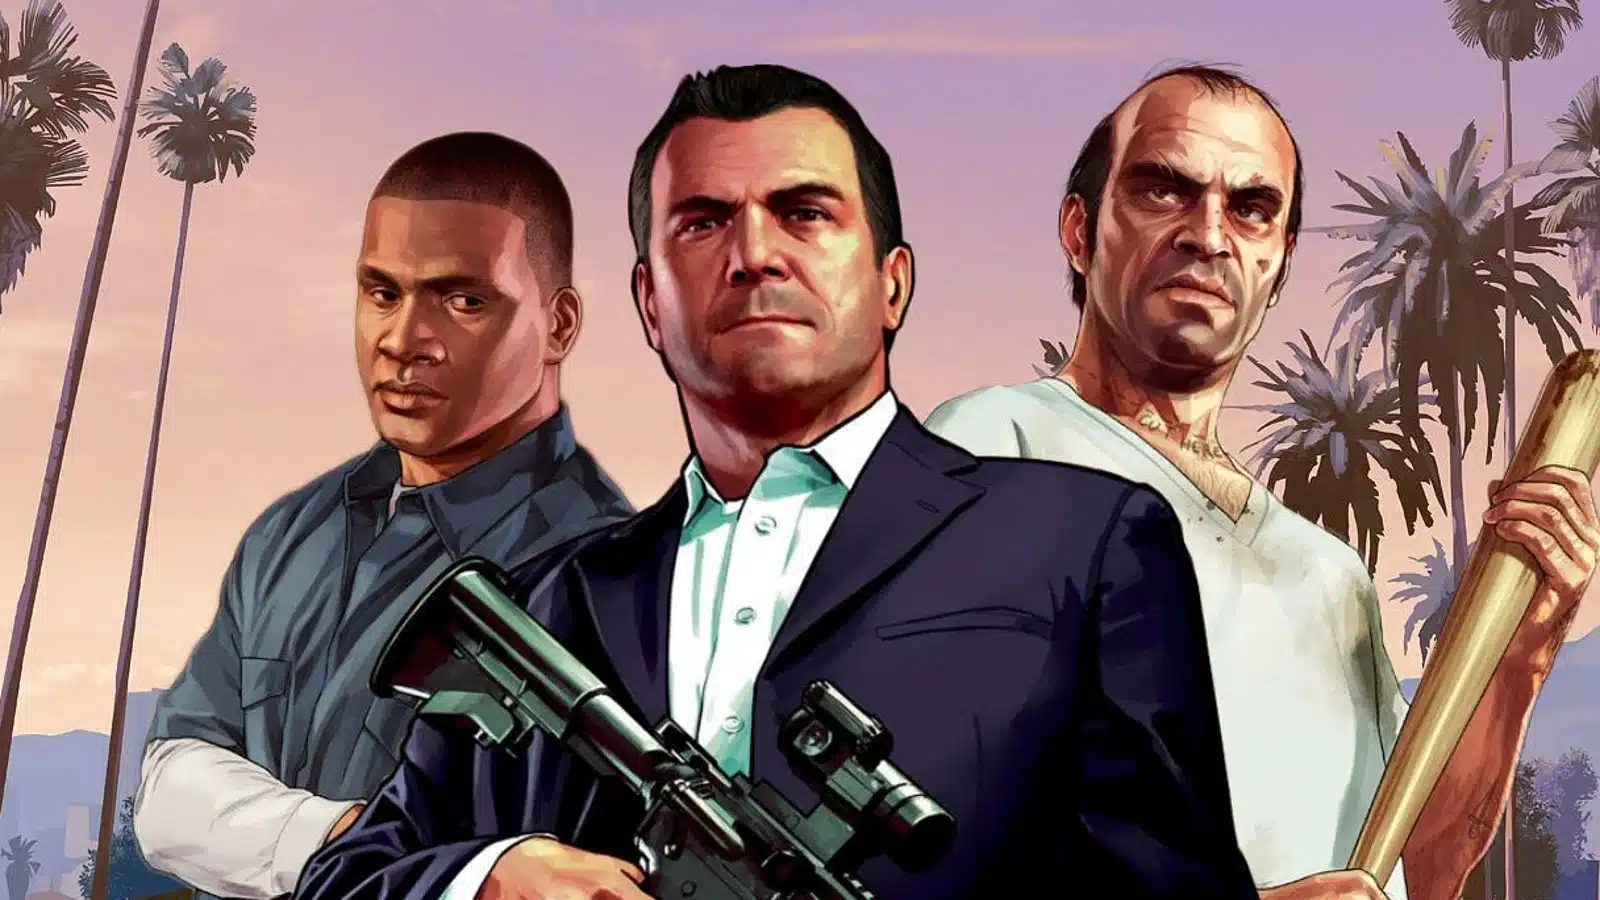 Grand Theft Auto V Reaches 200 Million Copies Sold